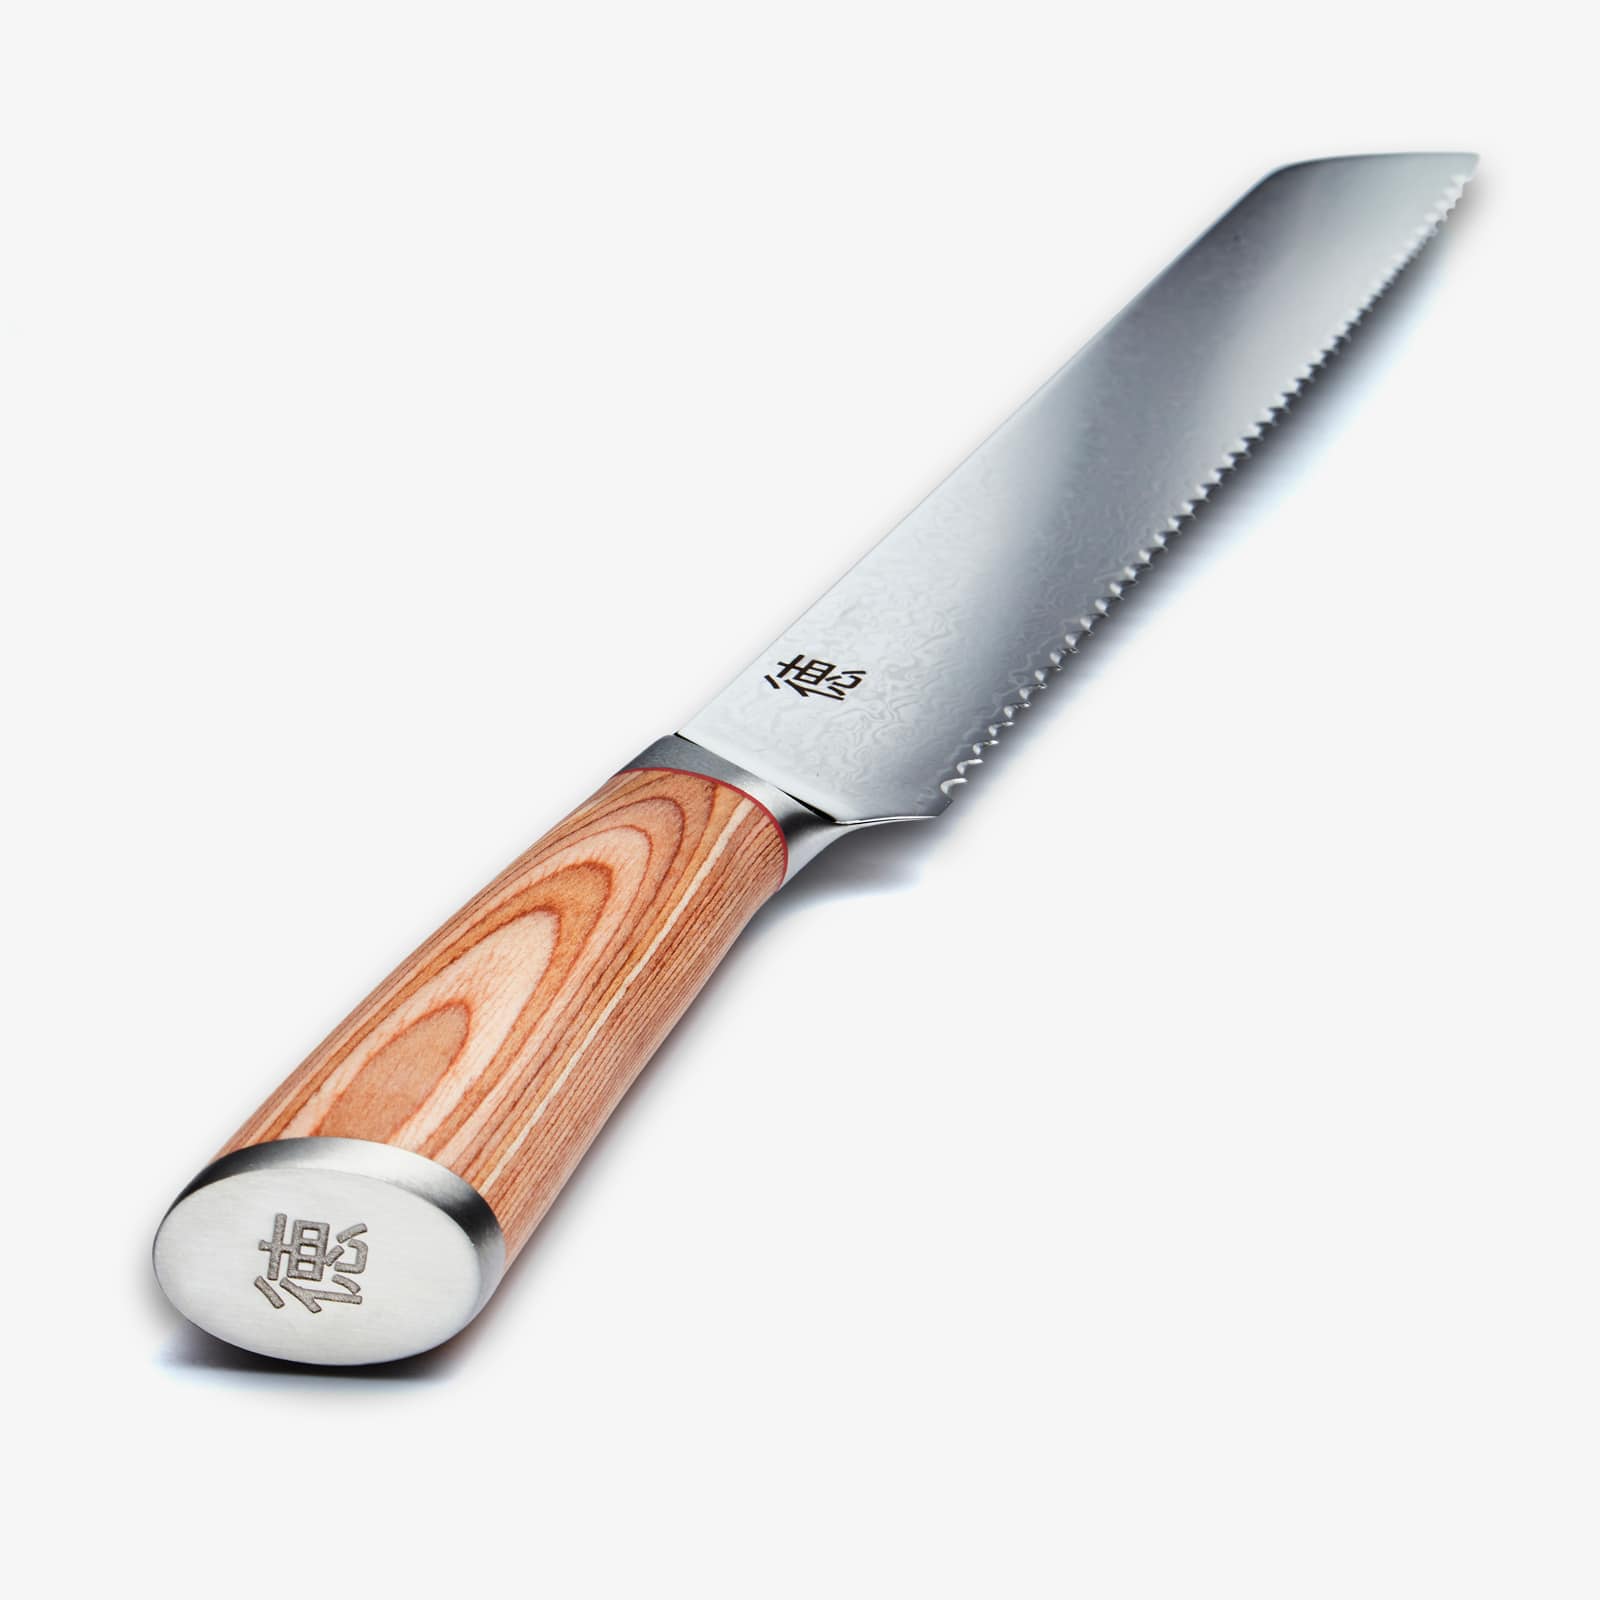 Haruta (はる た) 10 tum brödkniv